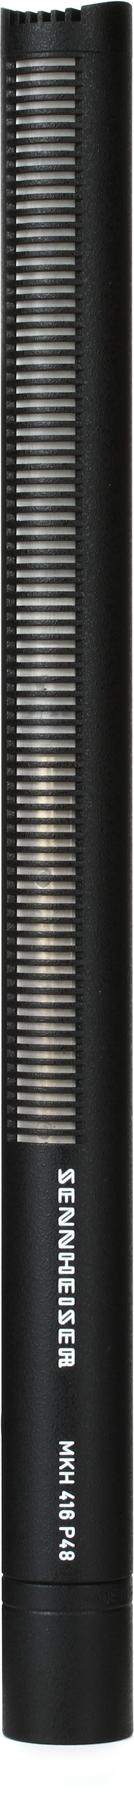 Sennheiser MKH 416 Shotgun Condenser Microphone-image